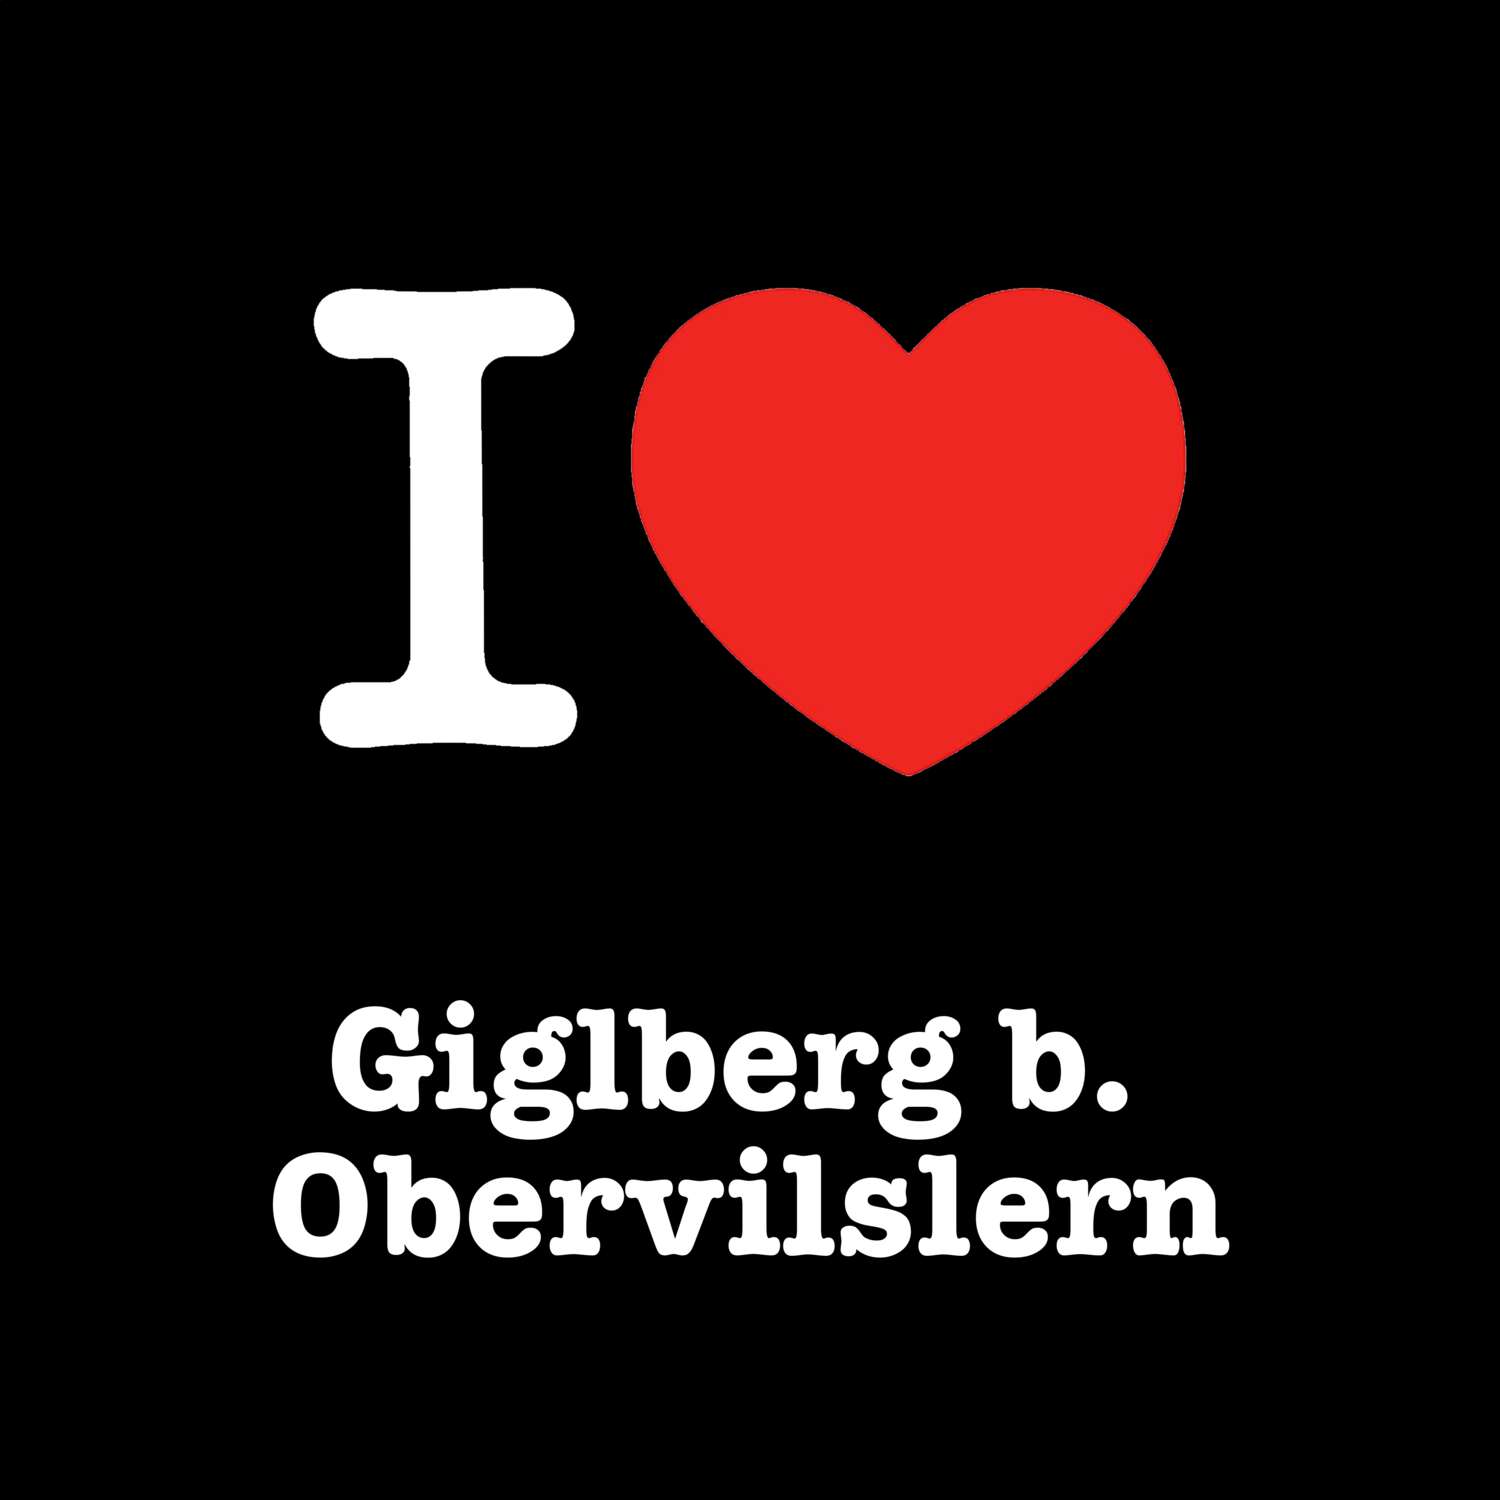 Giglberg b. Obervilslern T-Shirt »I love«